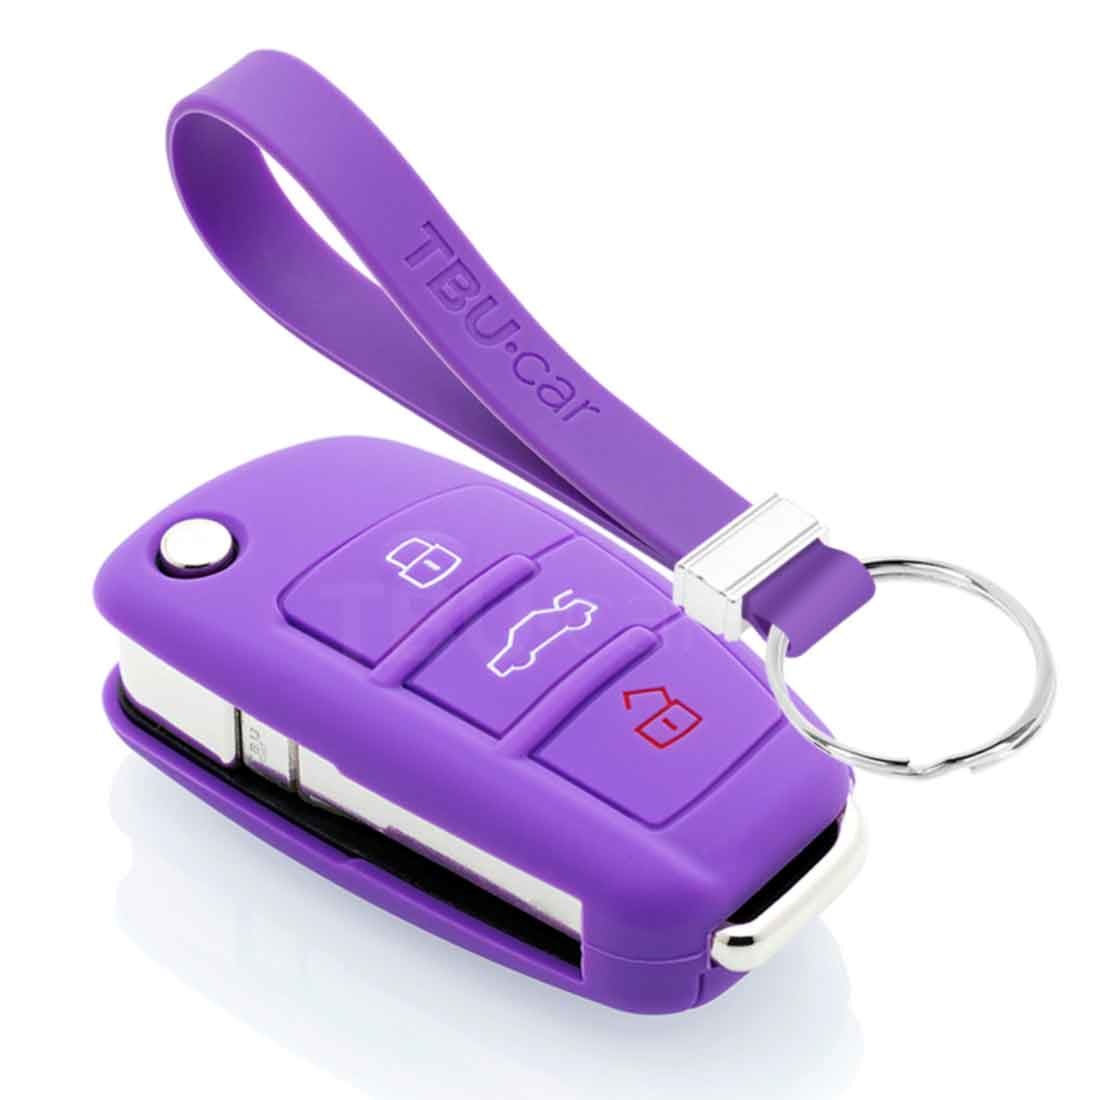 TBU car TBU car Autoschlüssel Hülle kompatibel mit Audi 3 Tasten - Schutzhülle aus Silikon - Auto Schlüsselhülle Cover in Violett